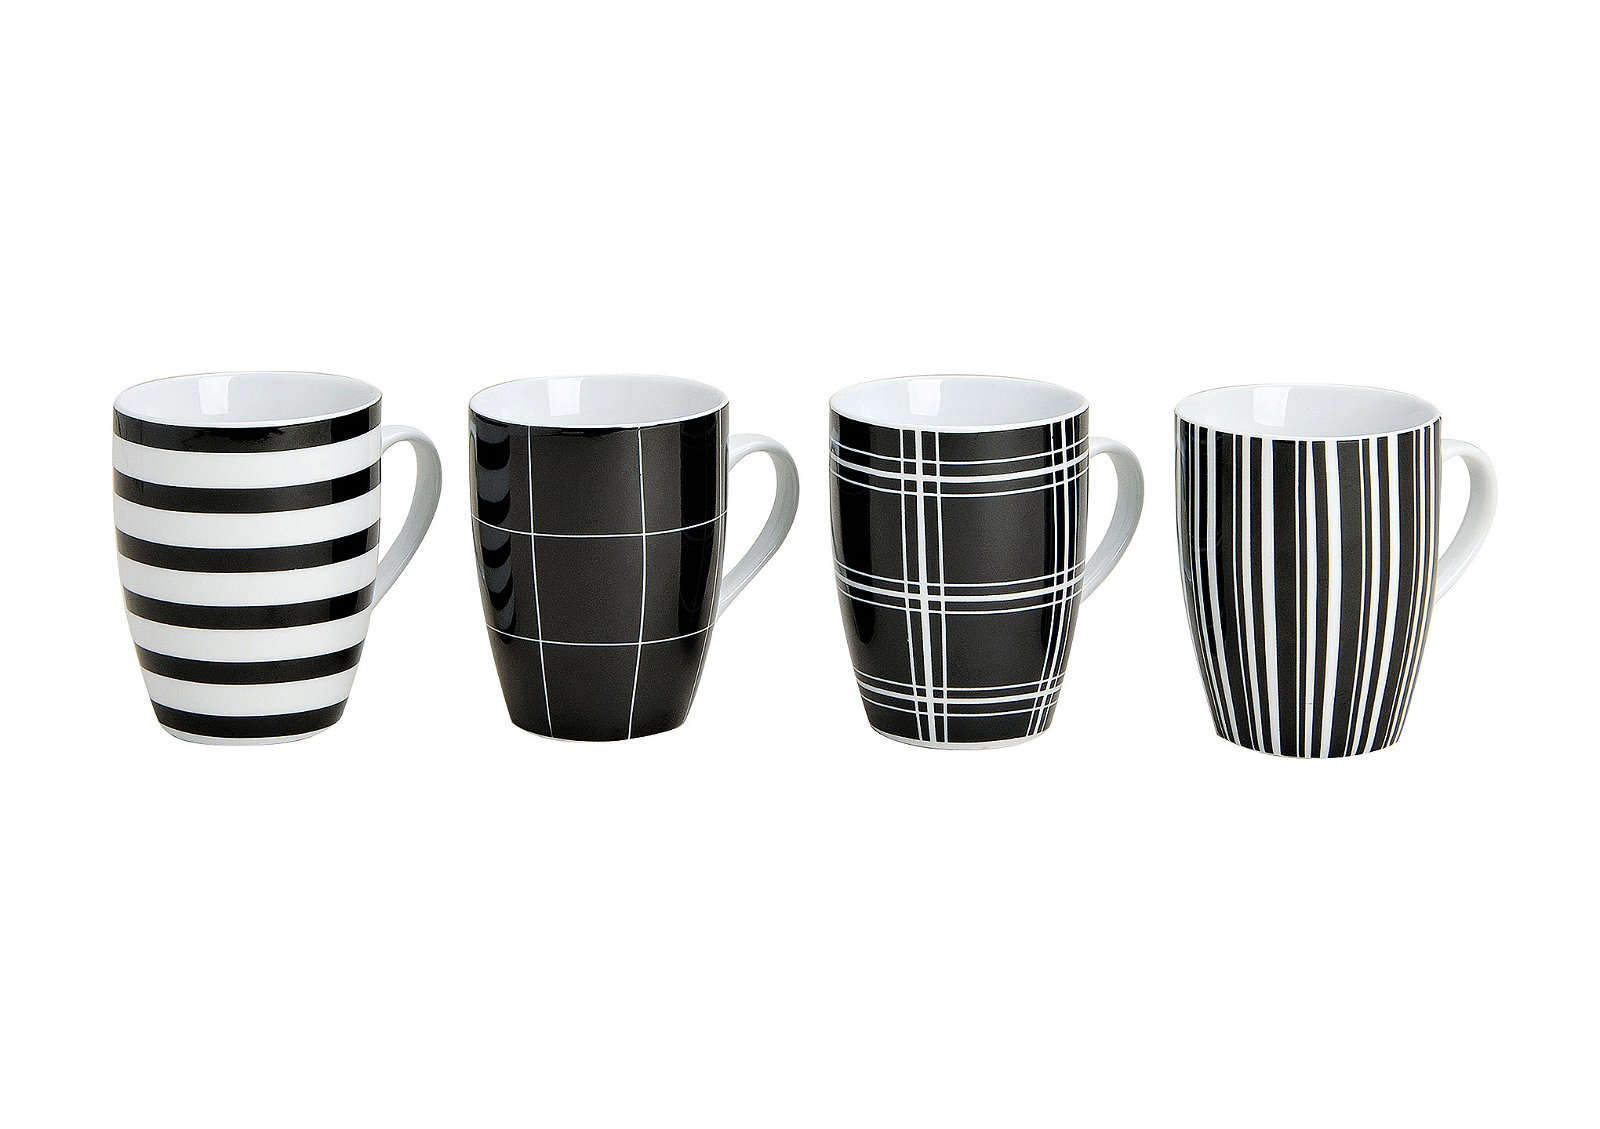 Gobelet rayures noir et blanc en porcelaine, 4 couleurs assorties, 10 cm